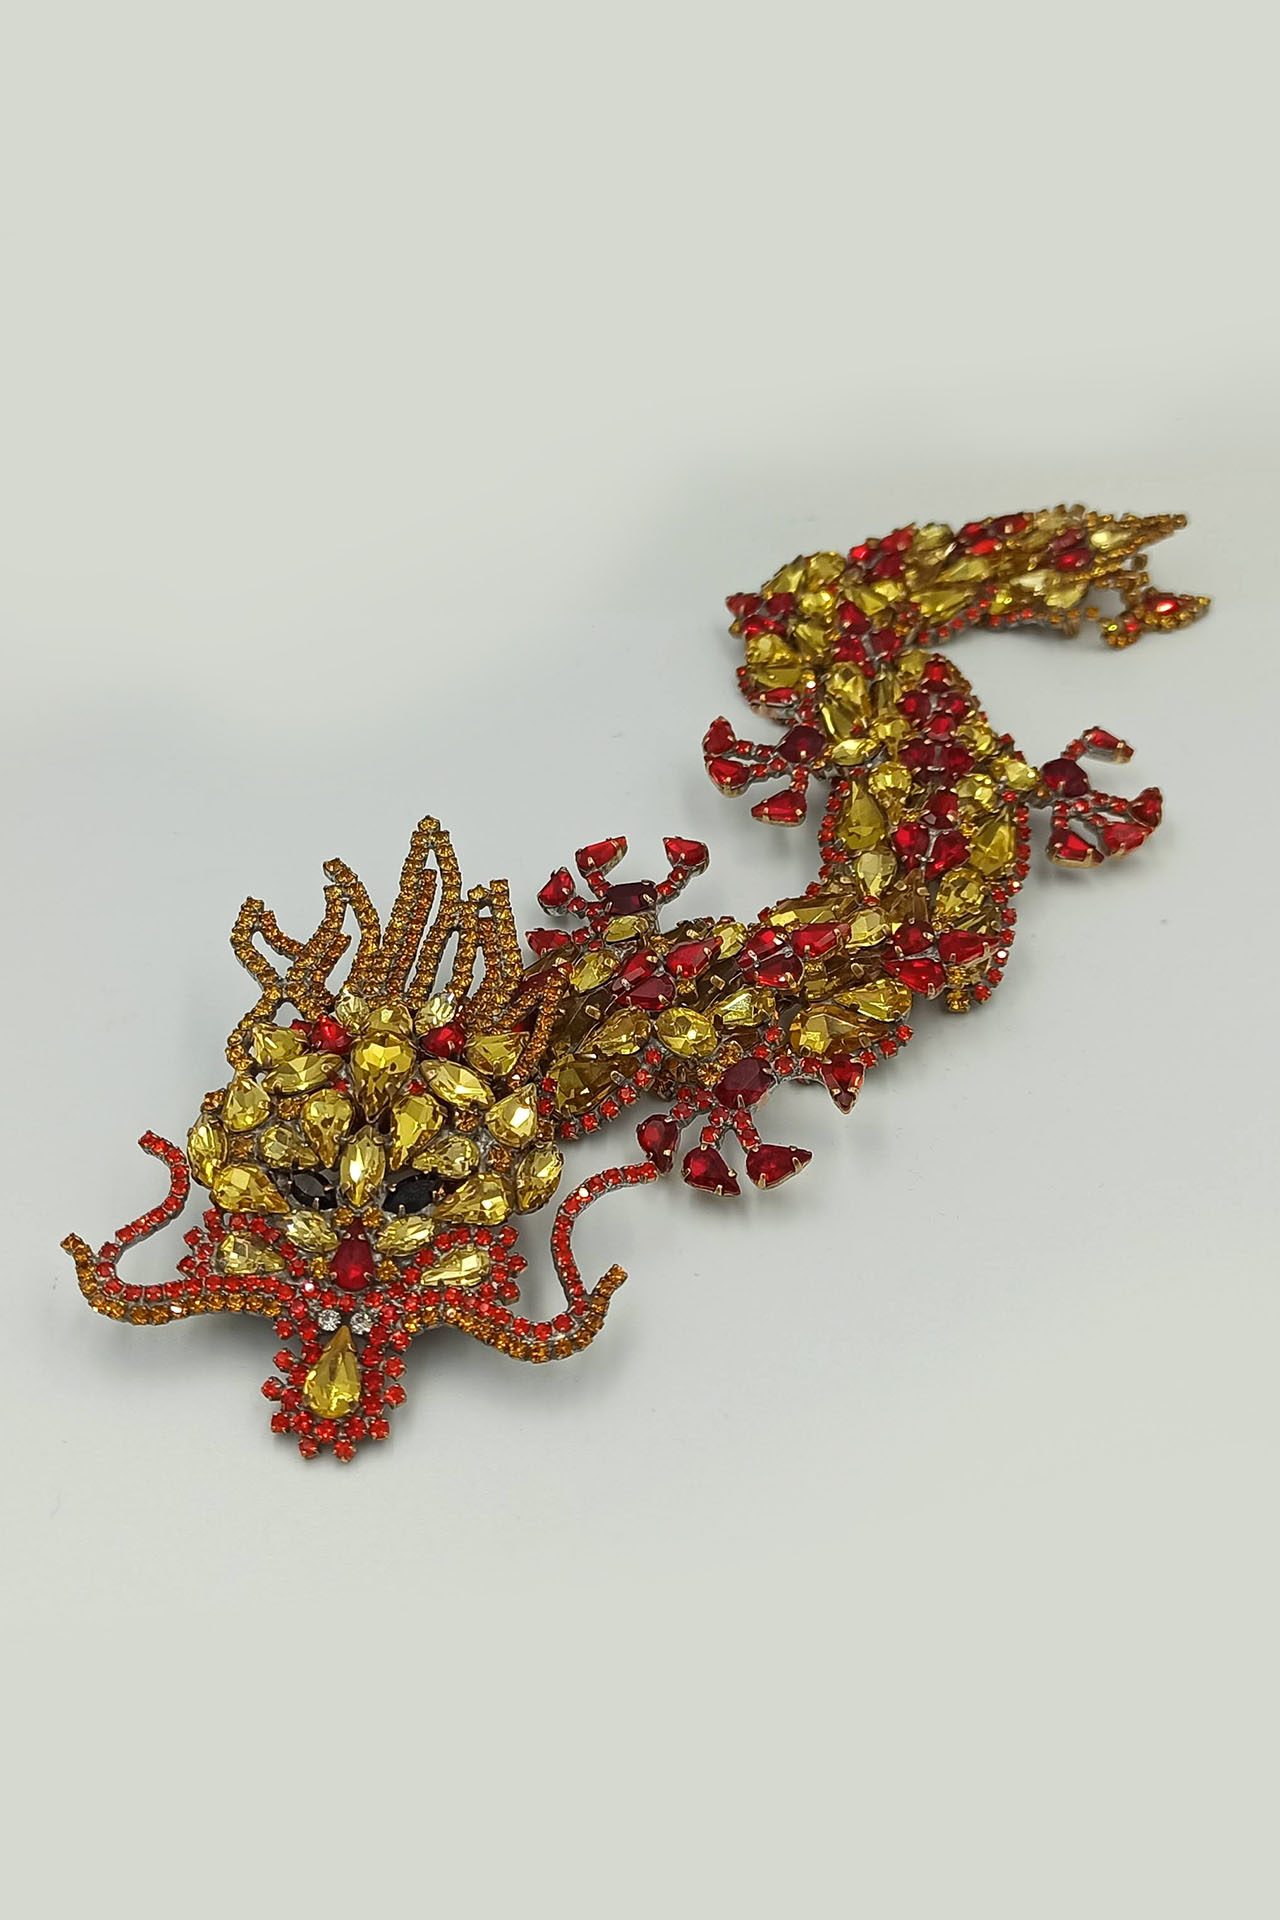 Handmade rhinestone brooch with a yellow Chinese dragon